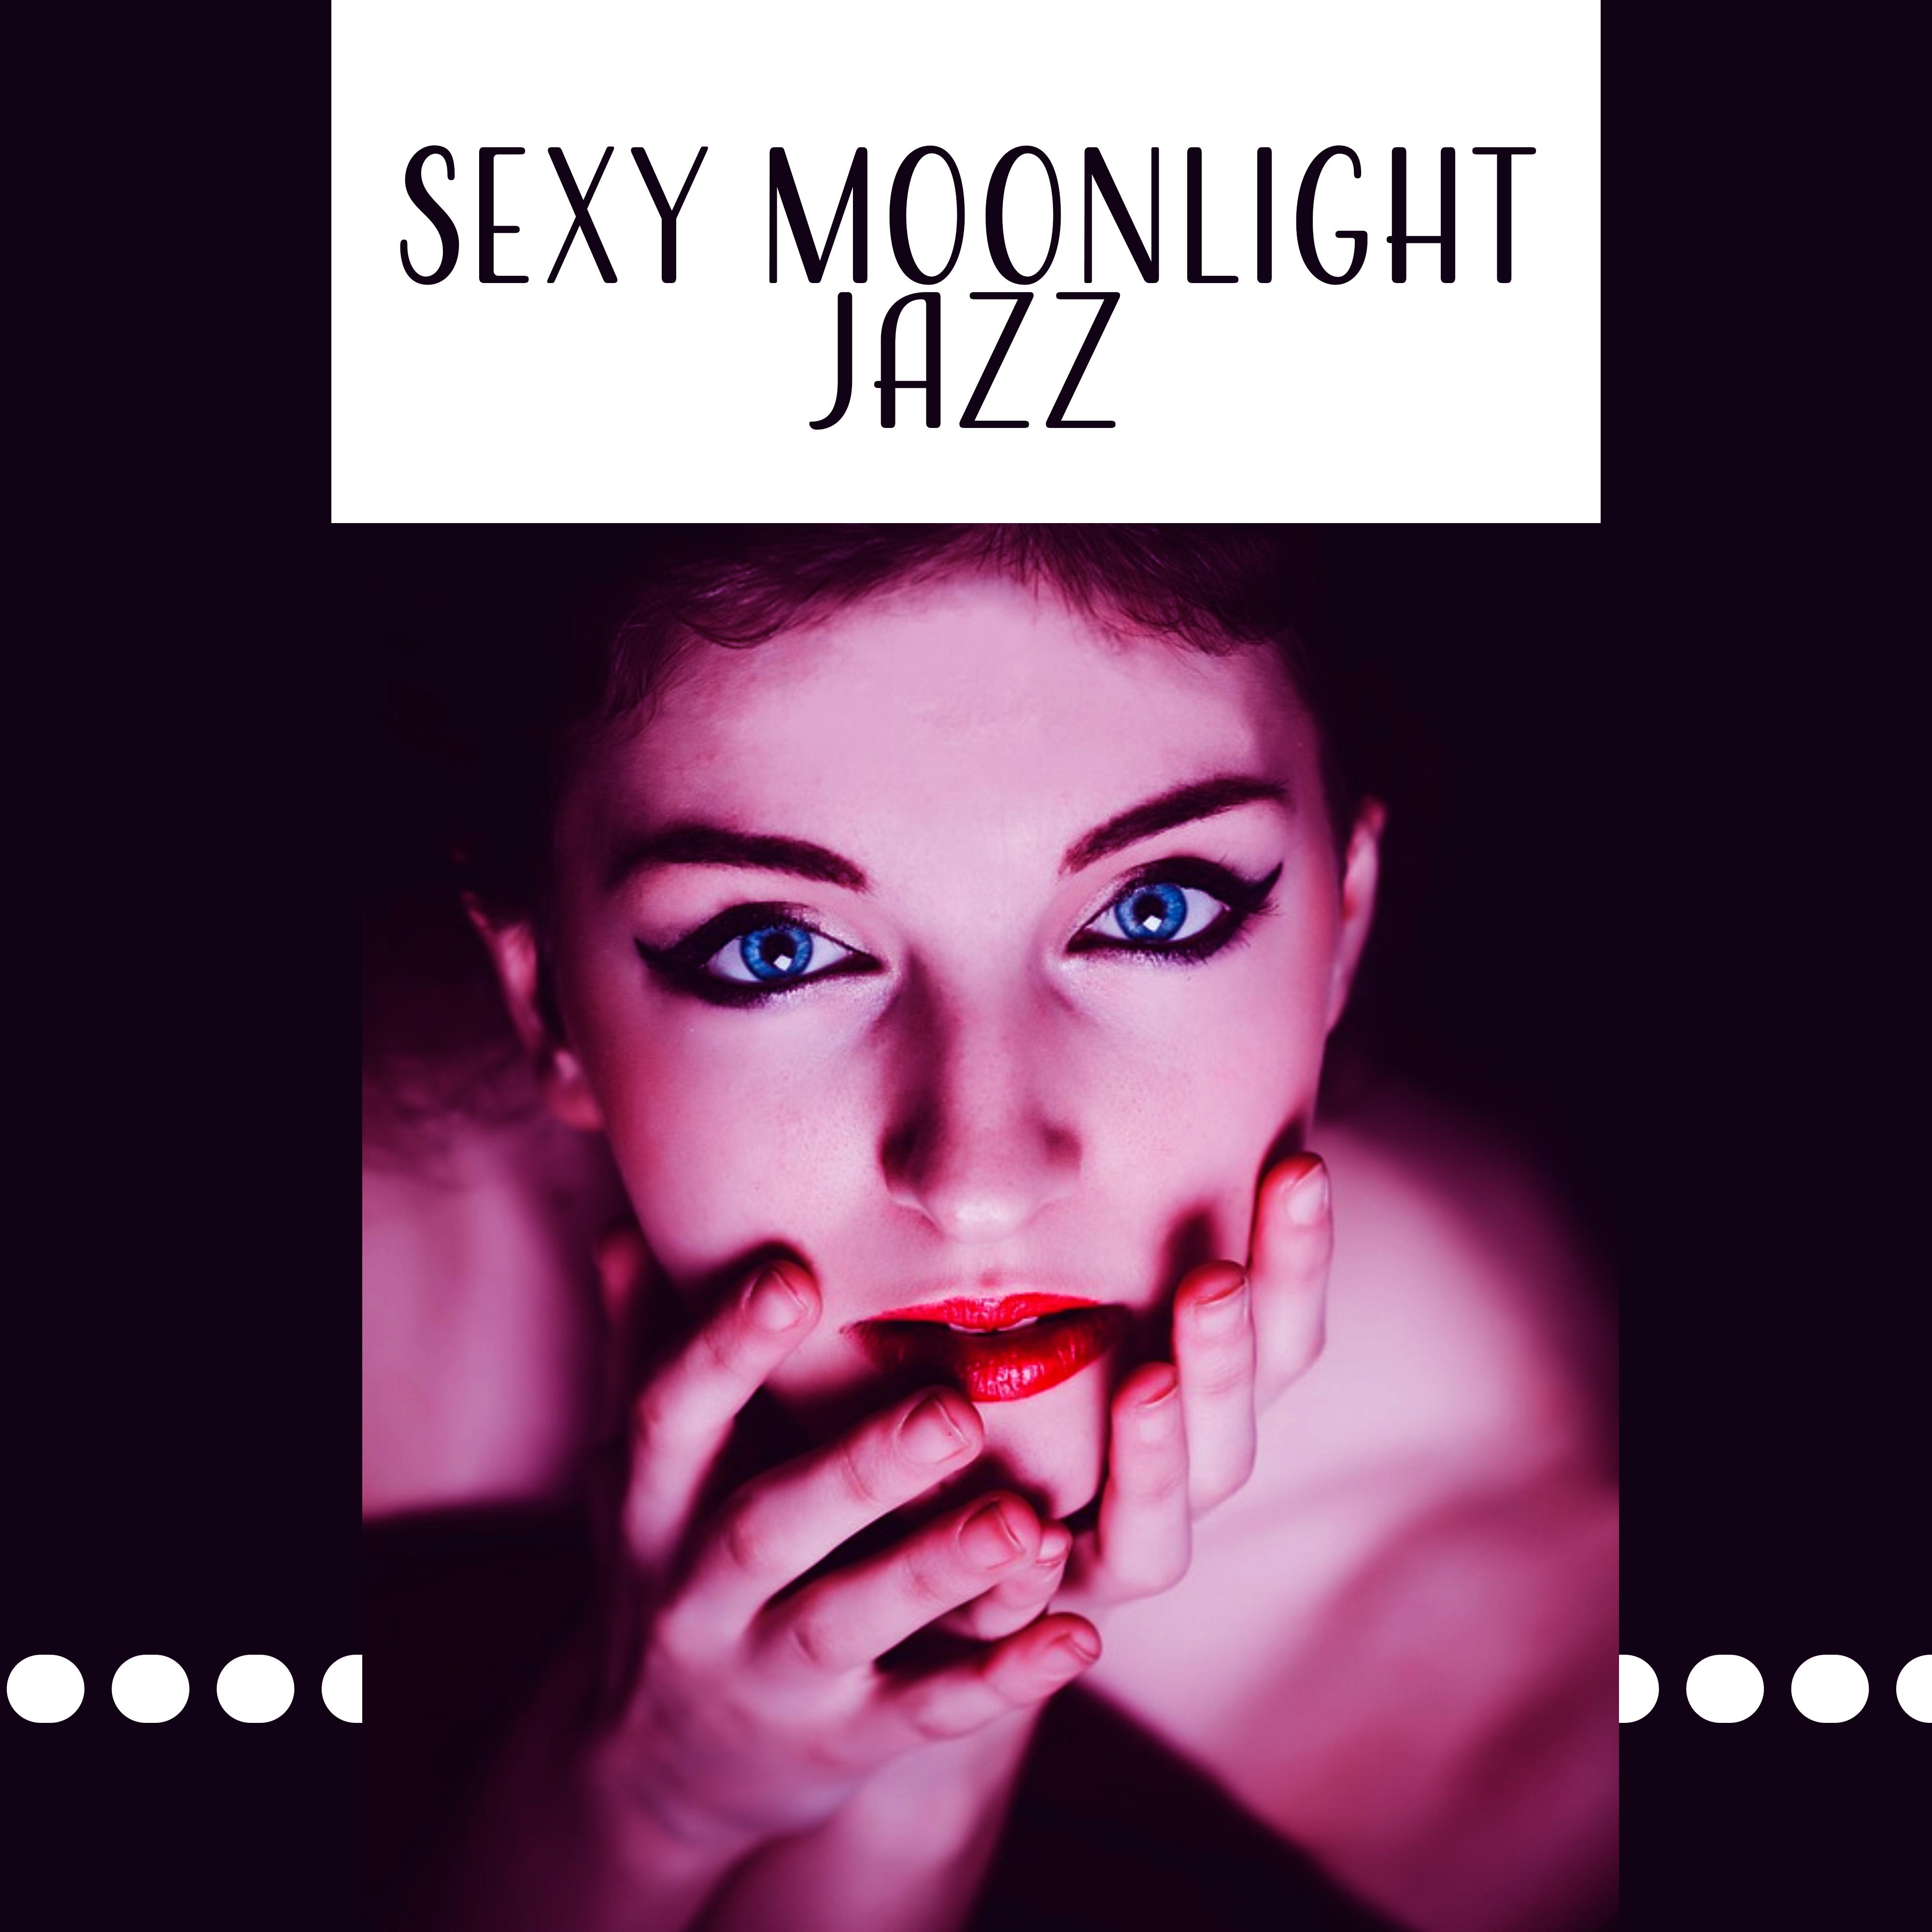 **** Moonlight Jazz – Jazz for Lovers, Shades of Jazz, Calming Piano Bar, Sensual Evening Music